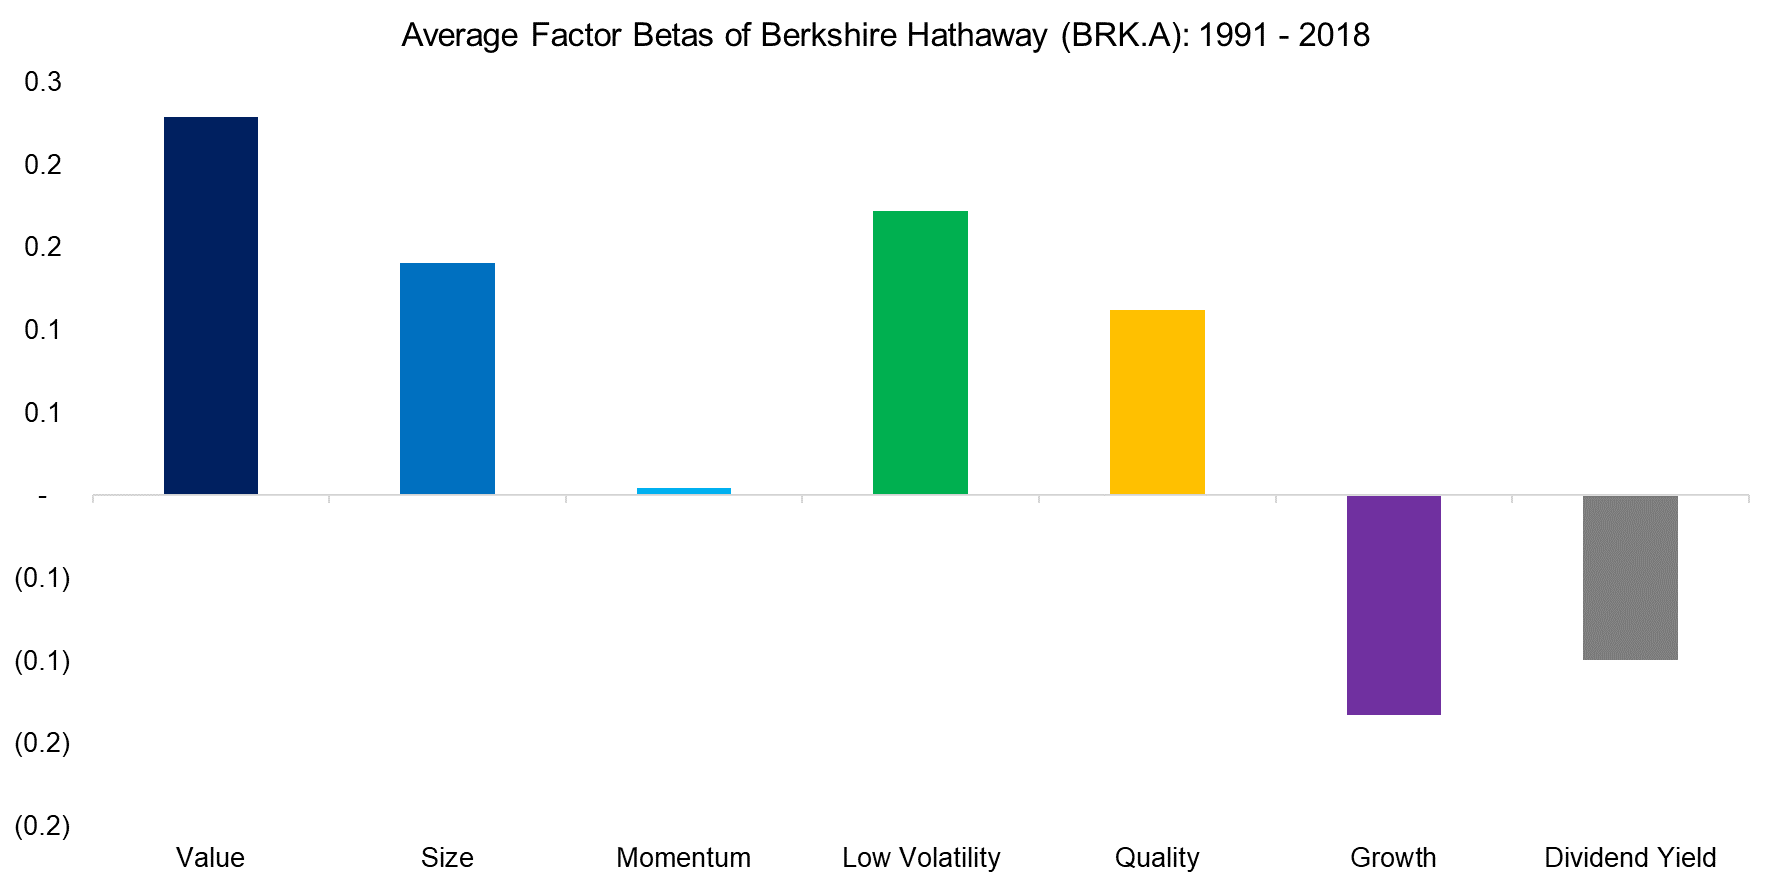 Average Factor Betas of Berkshire Hathaway (BRK.A) 1991 - 2018